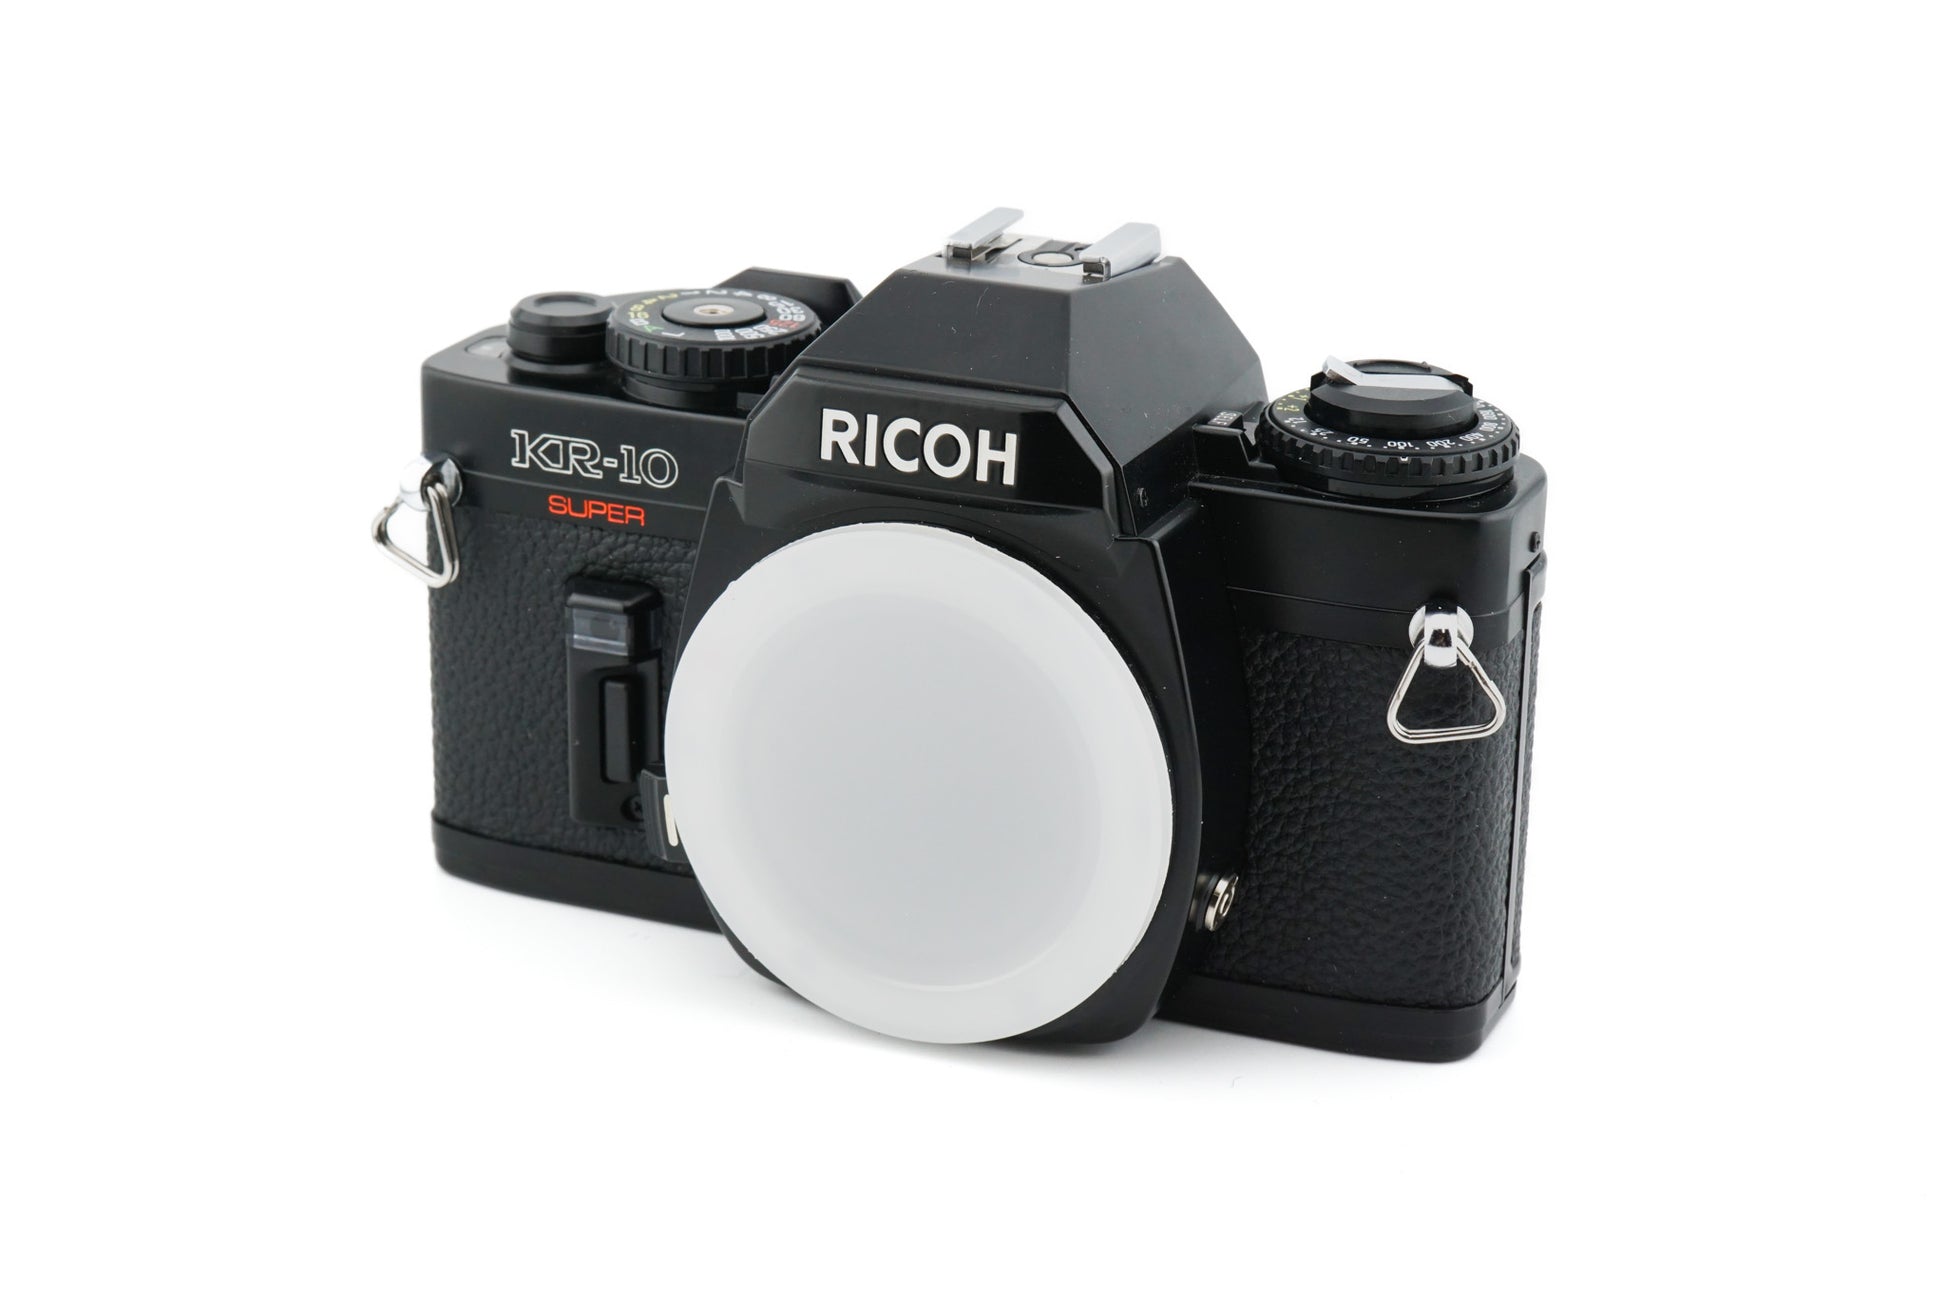 Ricoh KR-10 Super - Camera